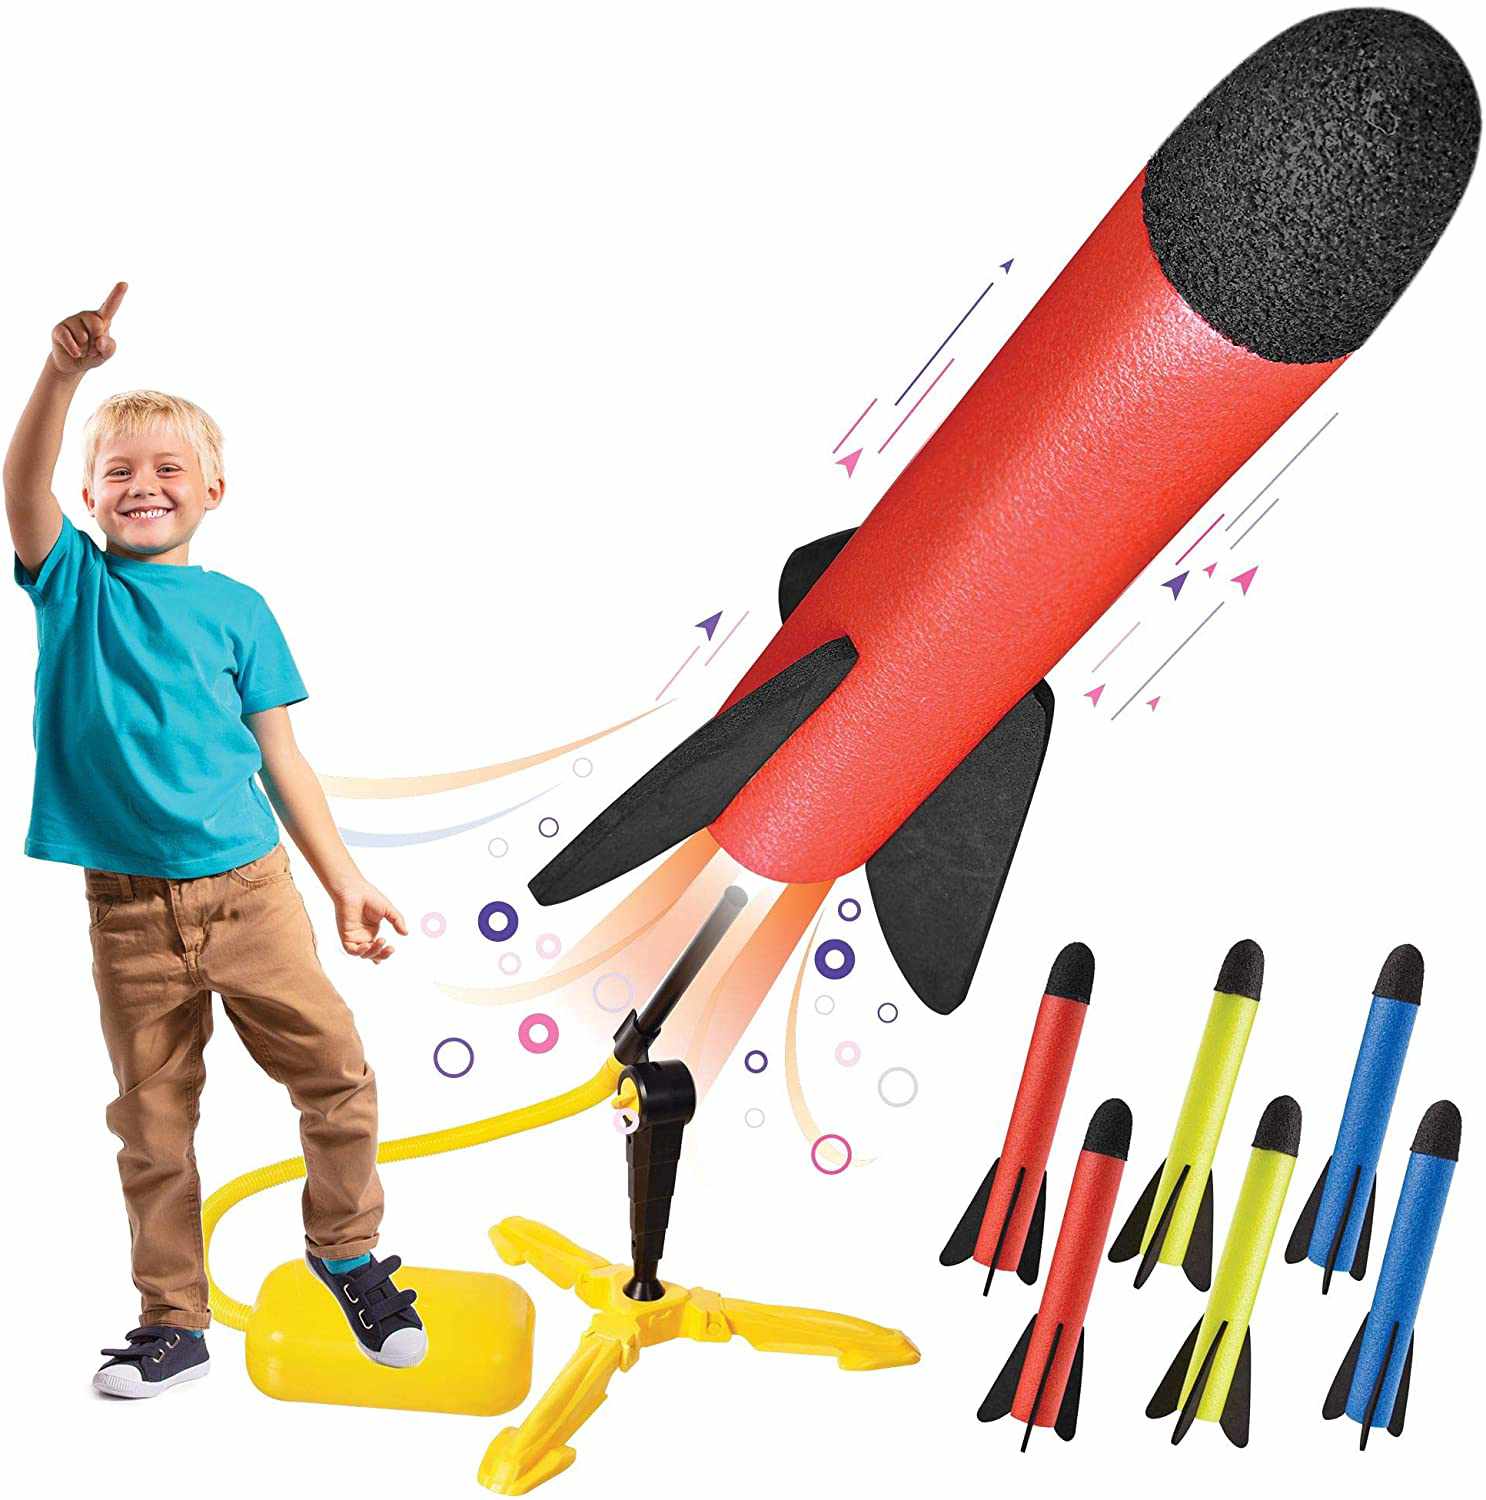 Motoworx玩具火箭发射器套装